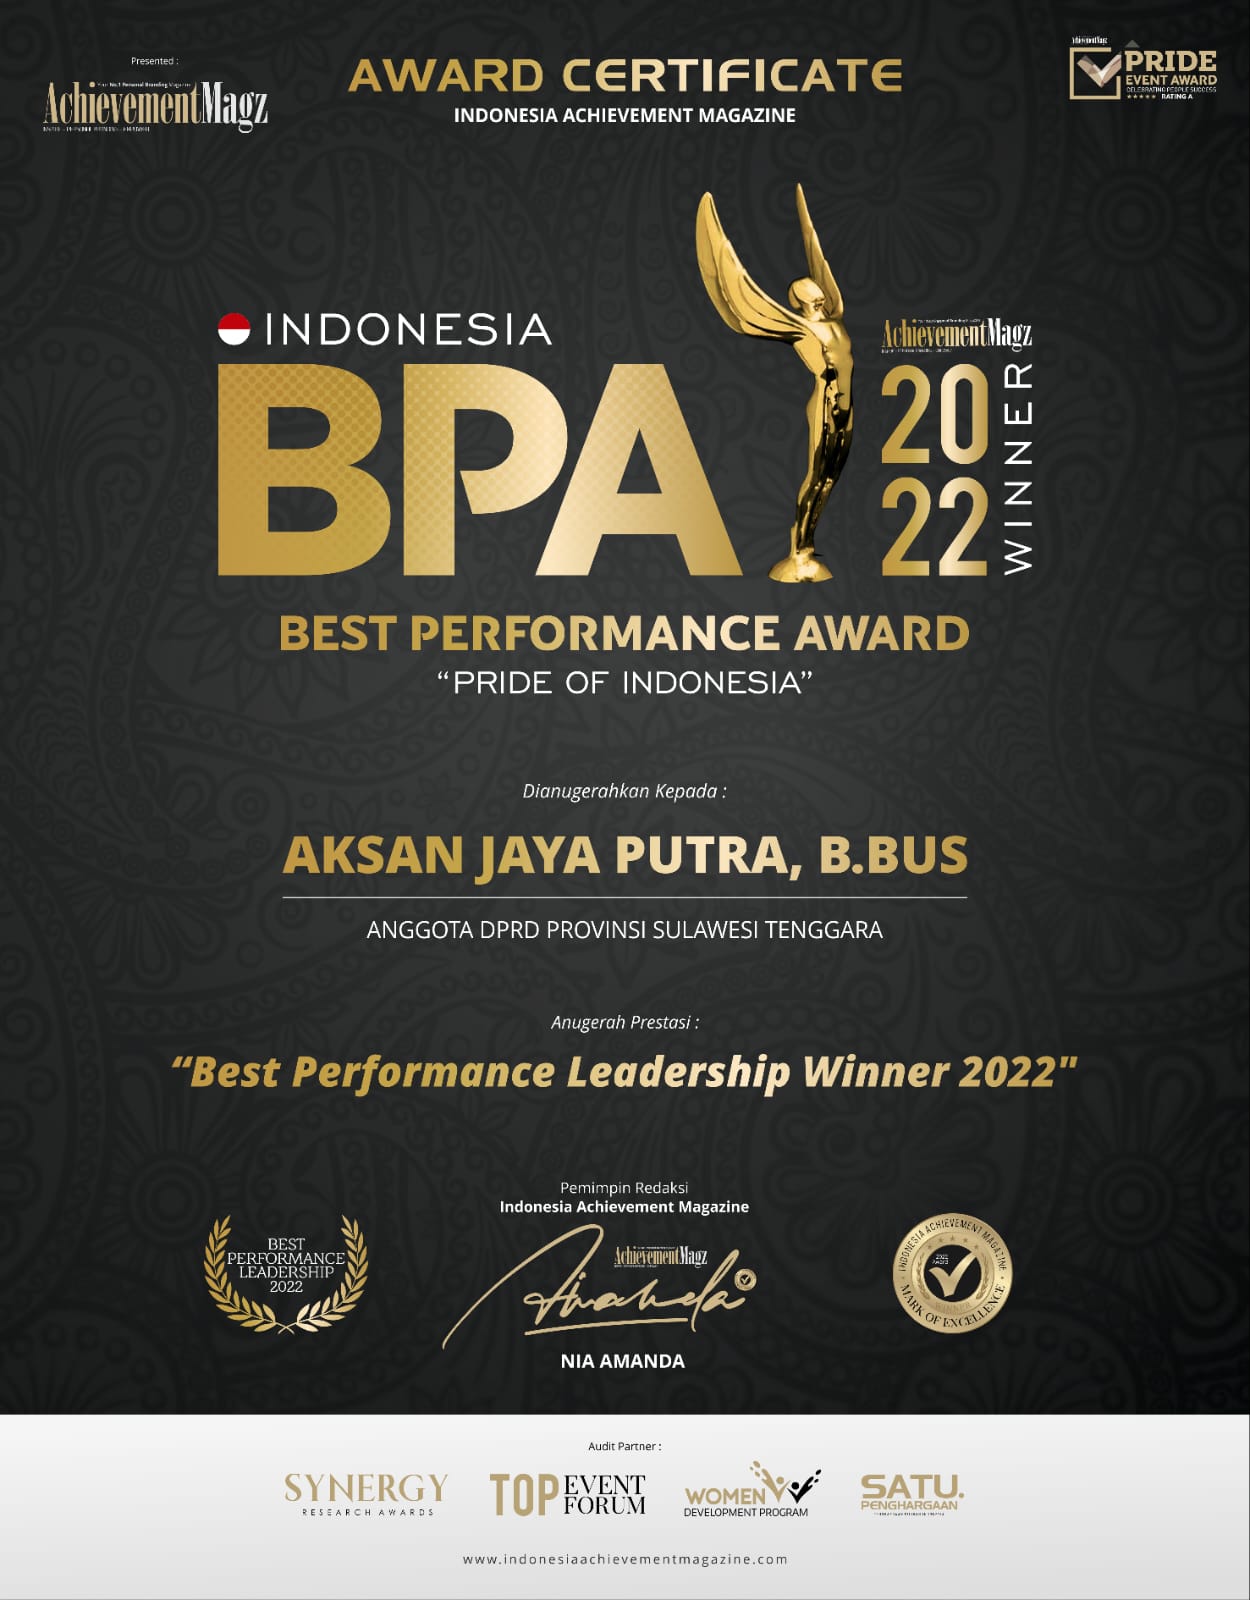 Indonesia Achievement Magazine Menganugerahi AJP Penghargaan Best Leadership 2022